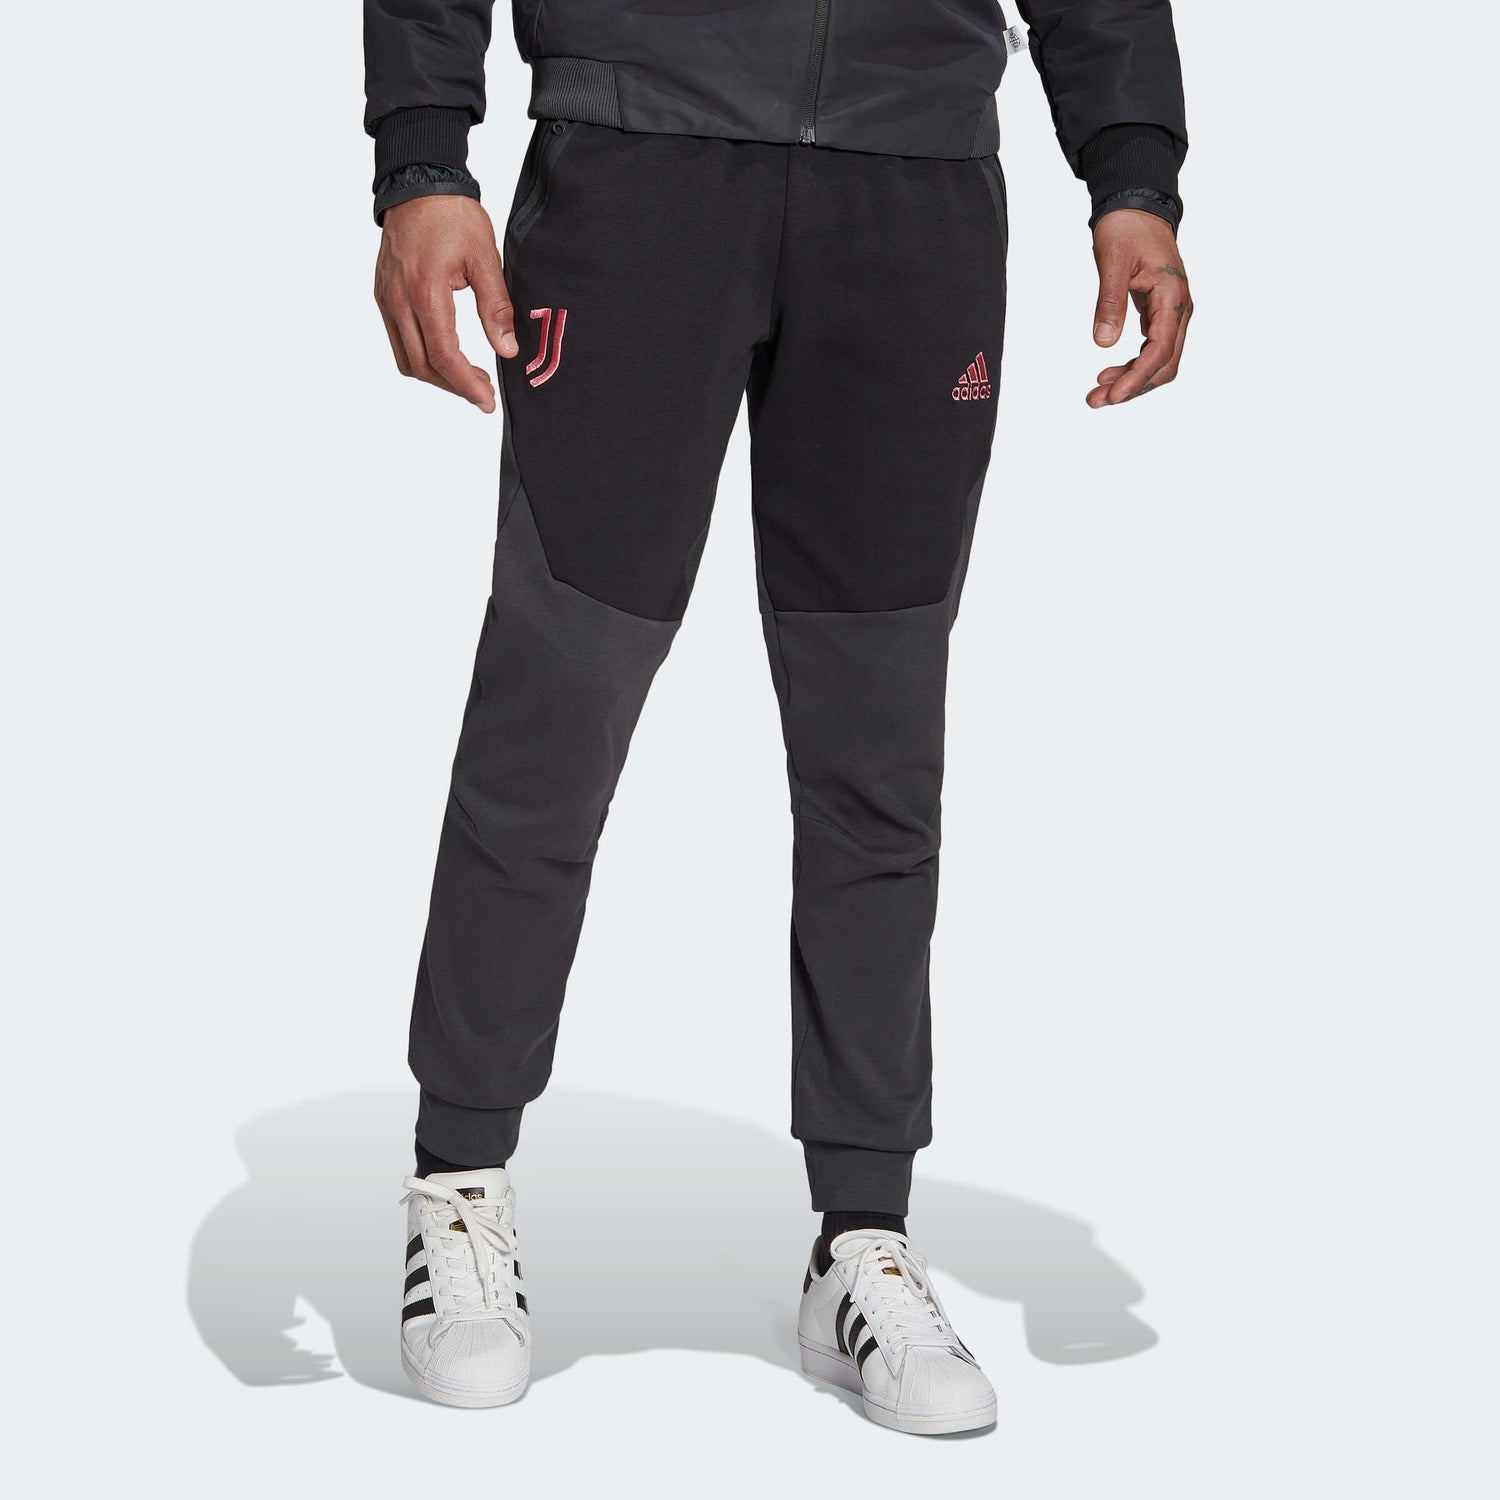 Person in Black Pants Wearing Nike Air Max 90 Black Carbon Gray Orange ·  Free Stock Photo